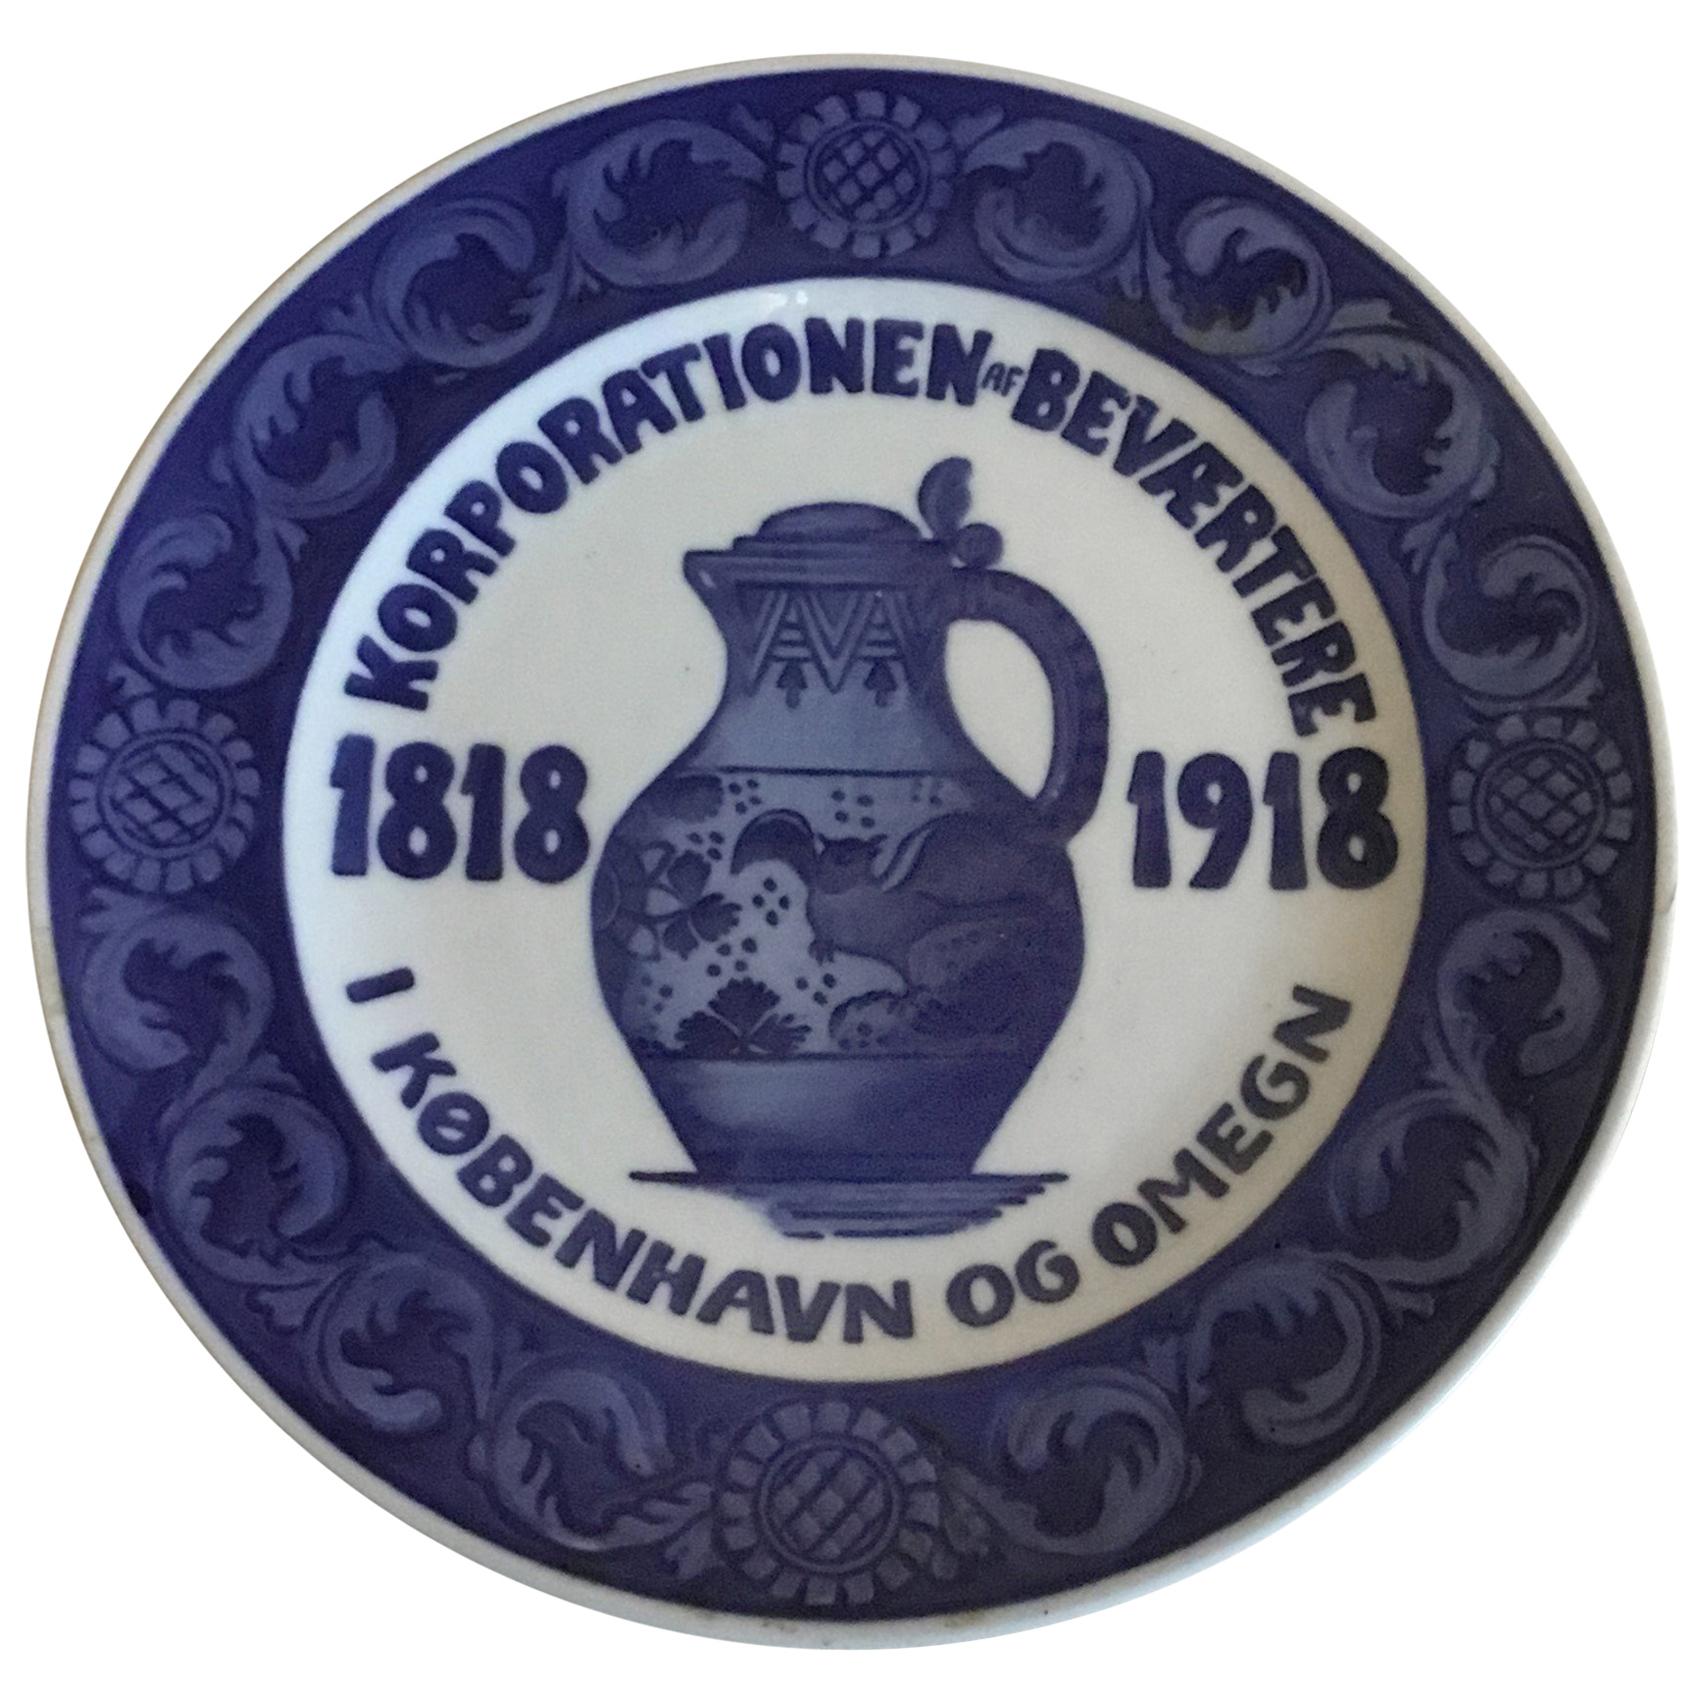 Royal Copenhagen Commemorative Plate from 1918 RC-CM180